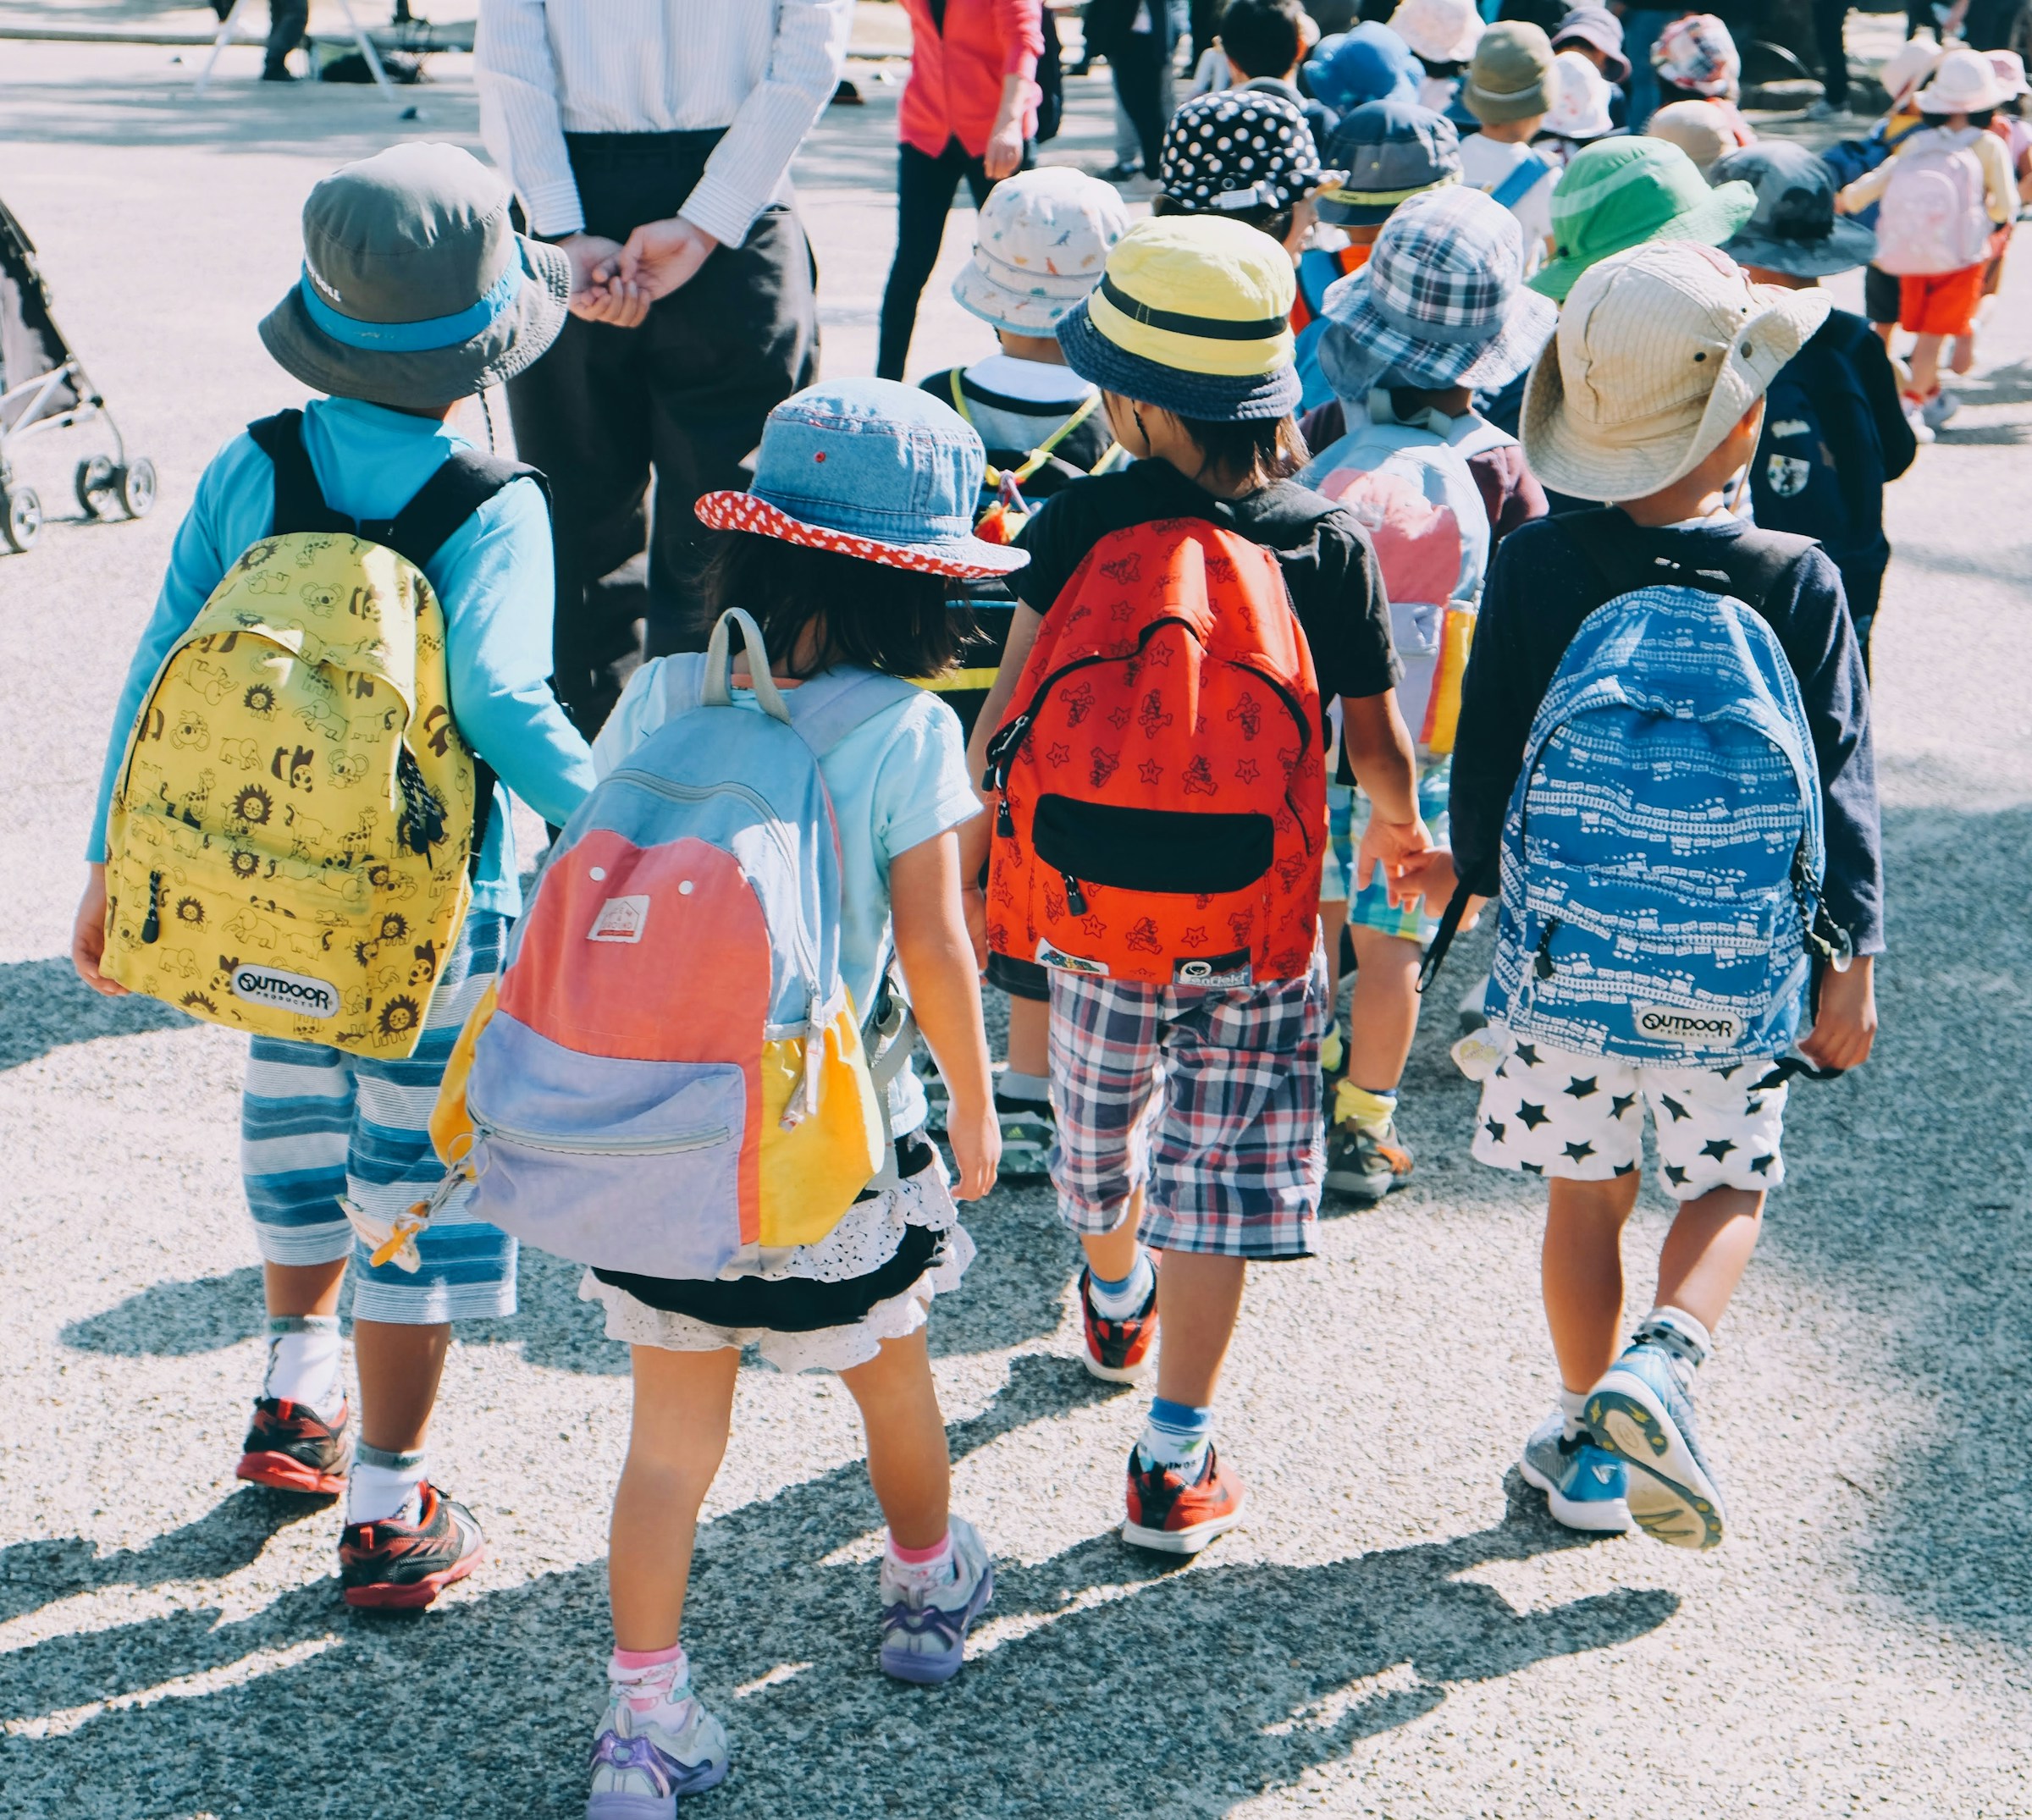 Children walking with backpacks | Source: Unsplash